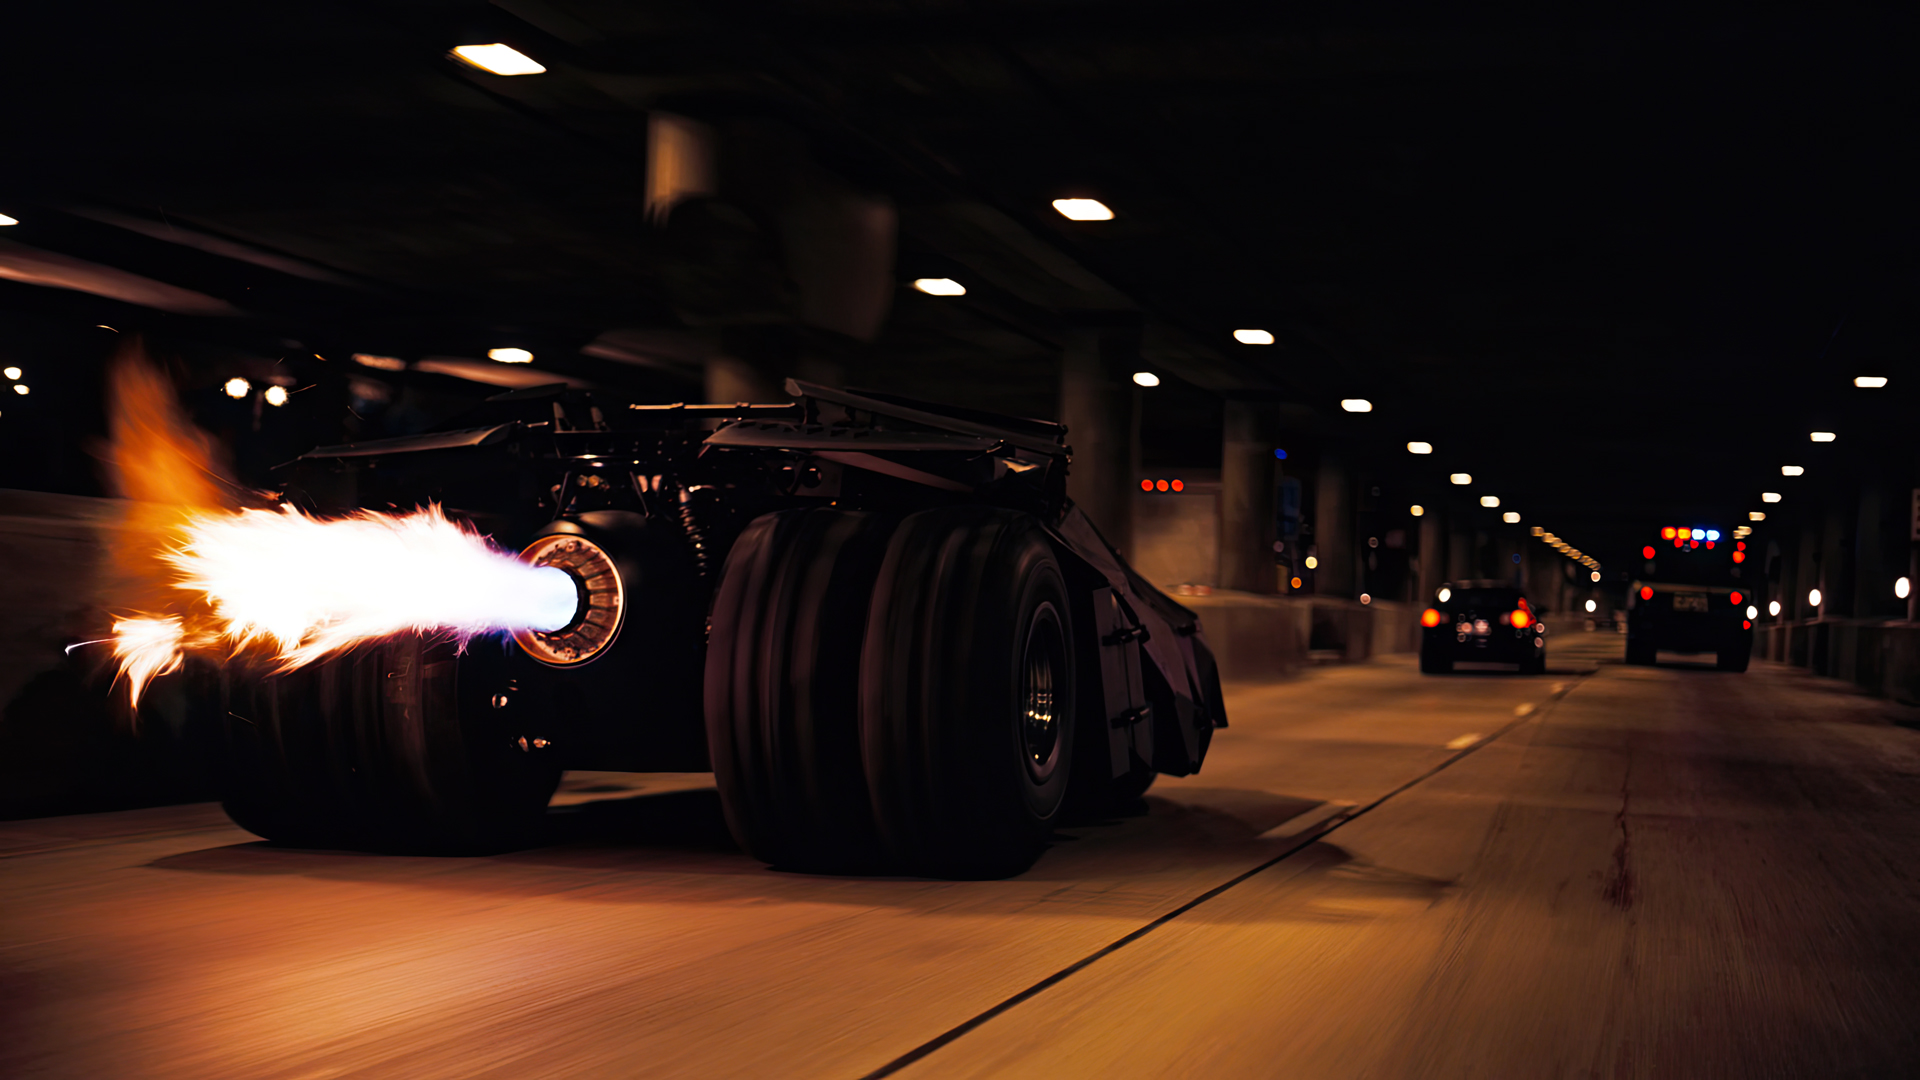 General 1920x1080 The Dark Knight Batmobile tunnel movies film stills Gotham City turbines car rear view taillights Christopher Nolan